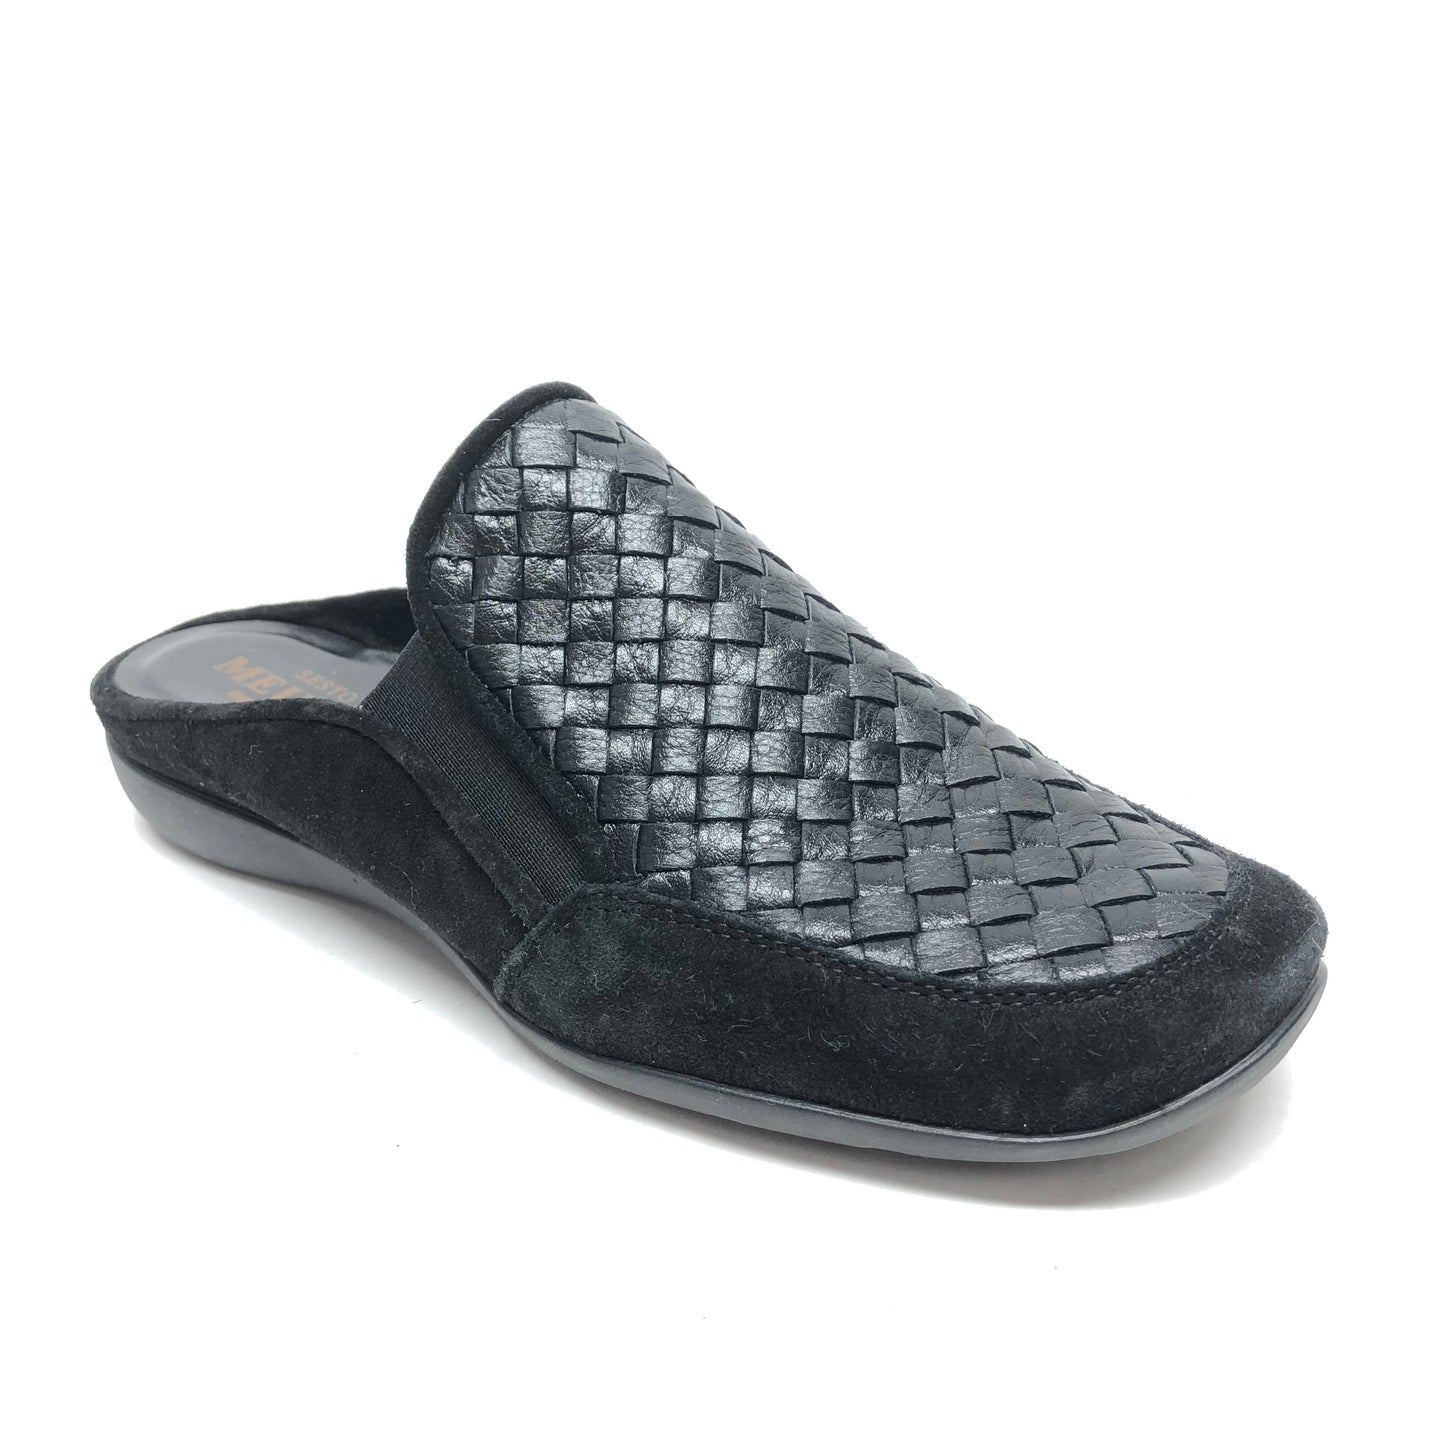 Black Shoes Flats Sesto Meucci, Size 7